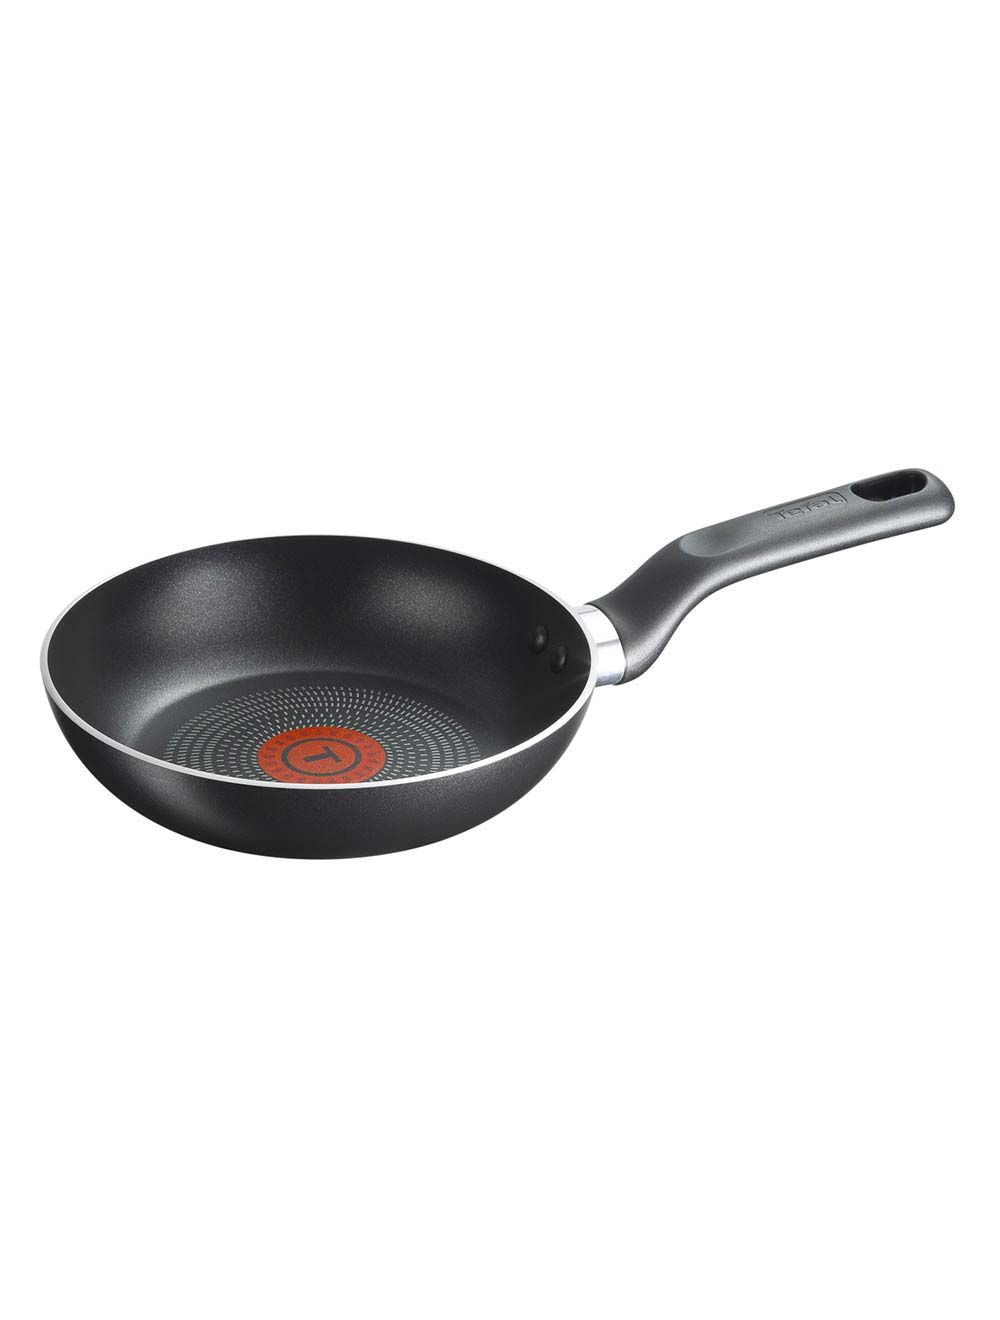 Tefal Super Cook Non-Stick Fry Pan 24 cm,B1430484